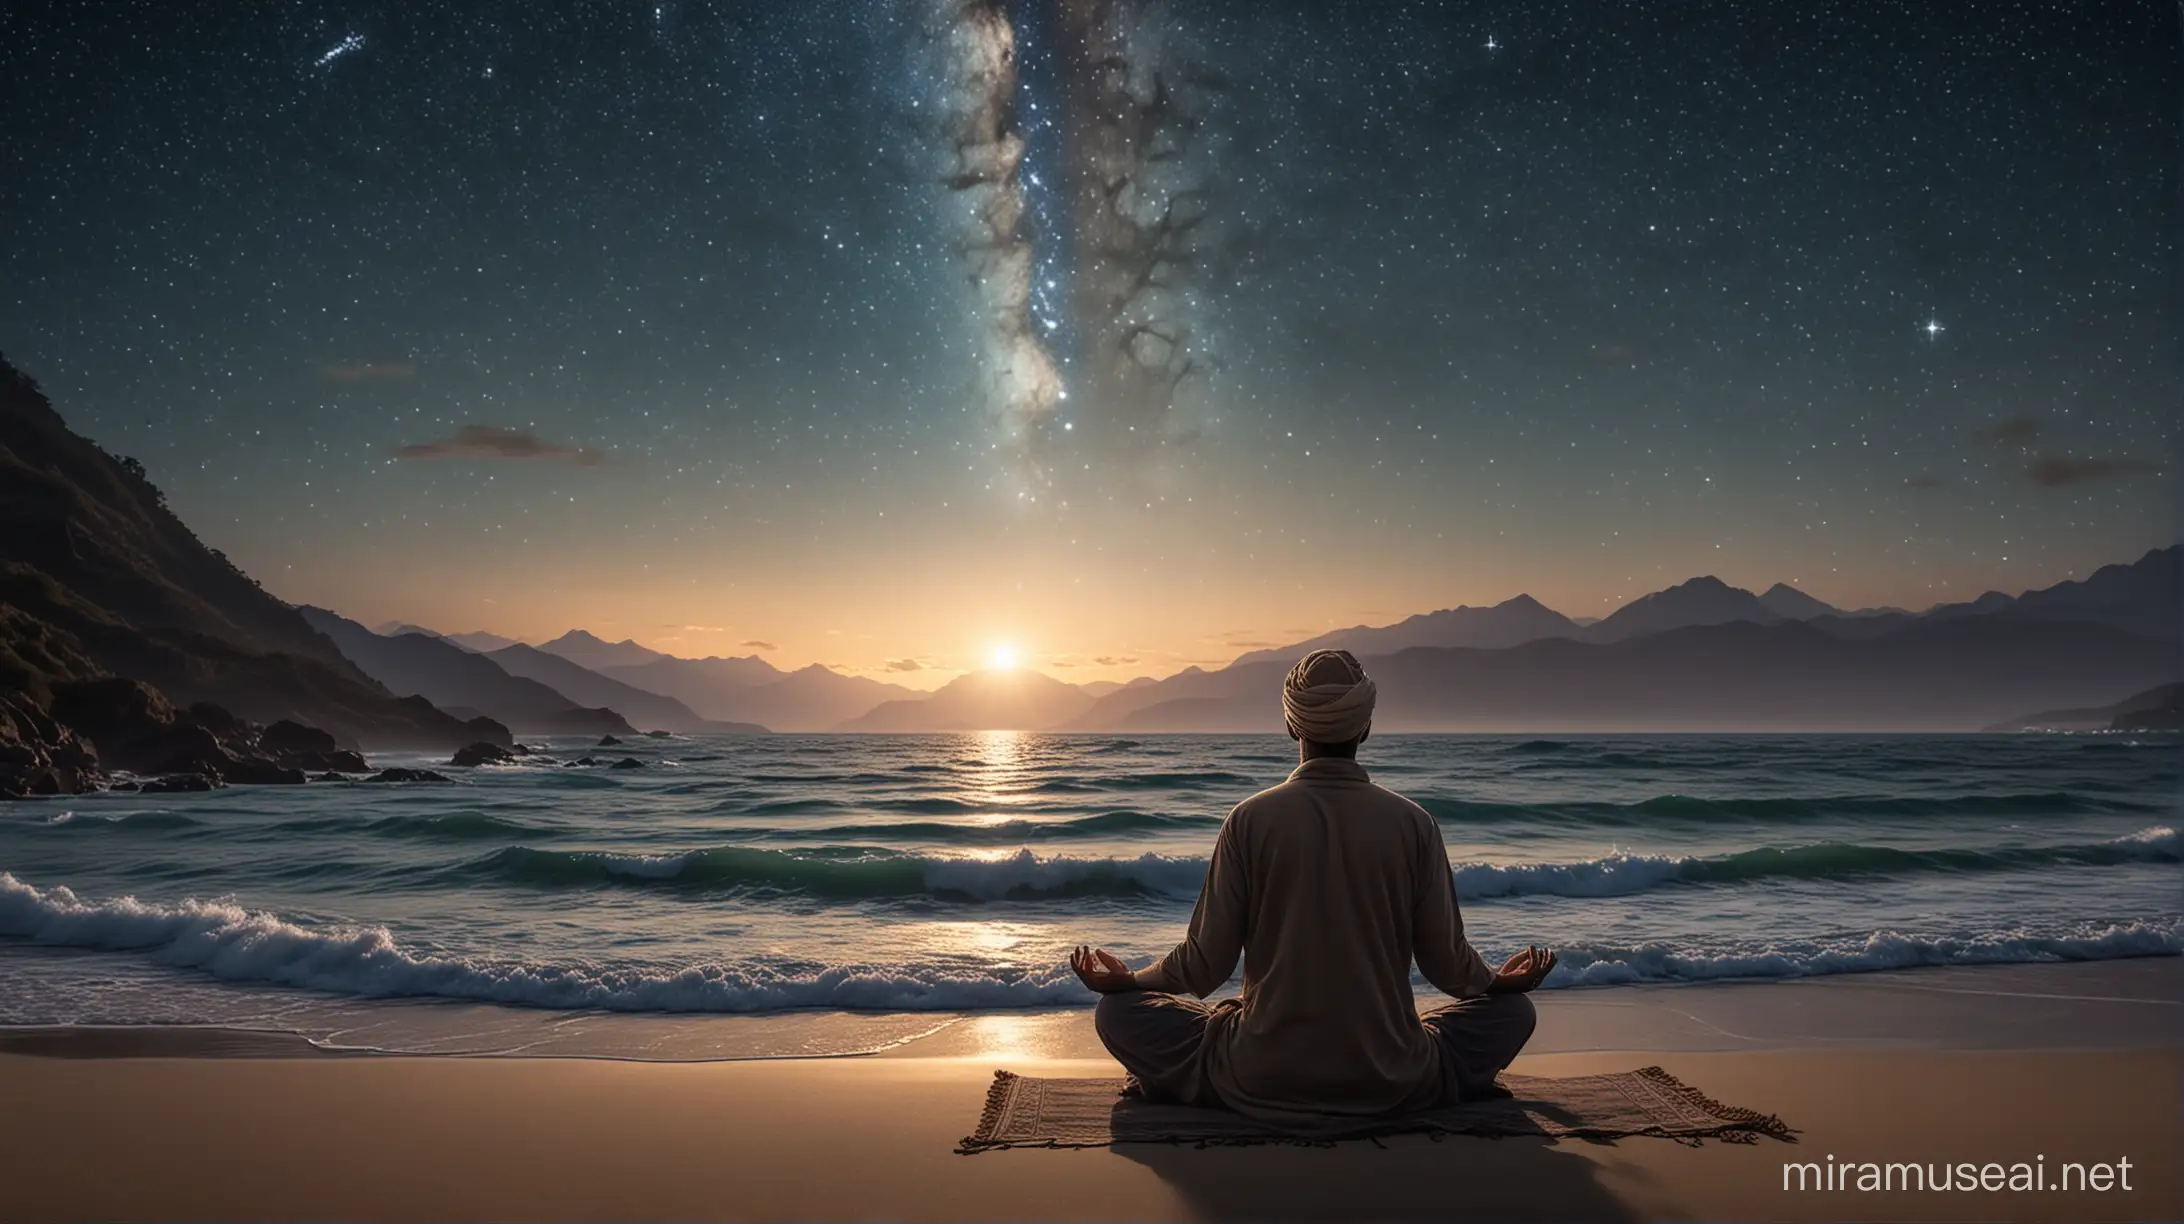 Muslim Man Meditating by Ocean with Mountain Starlight